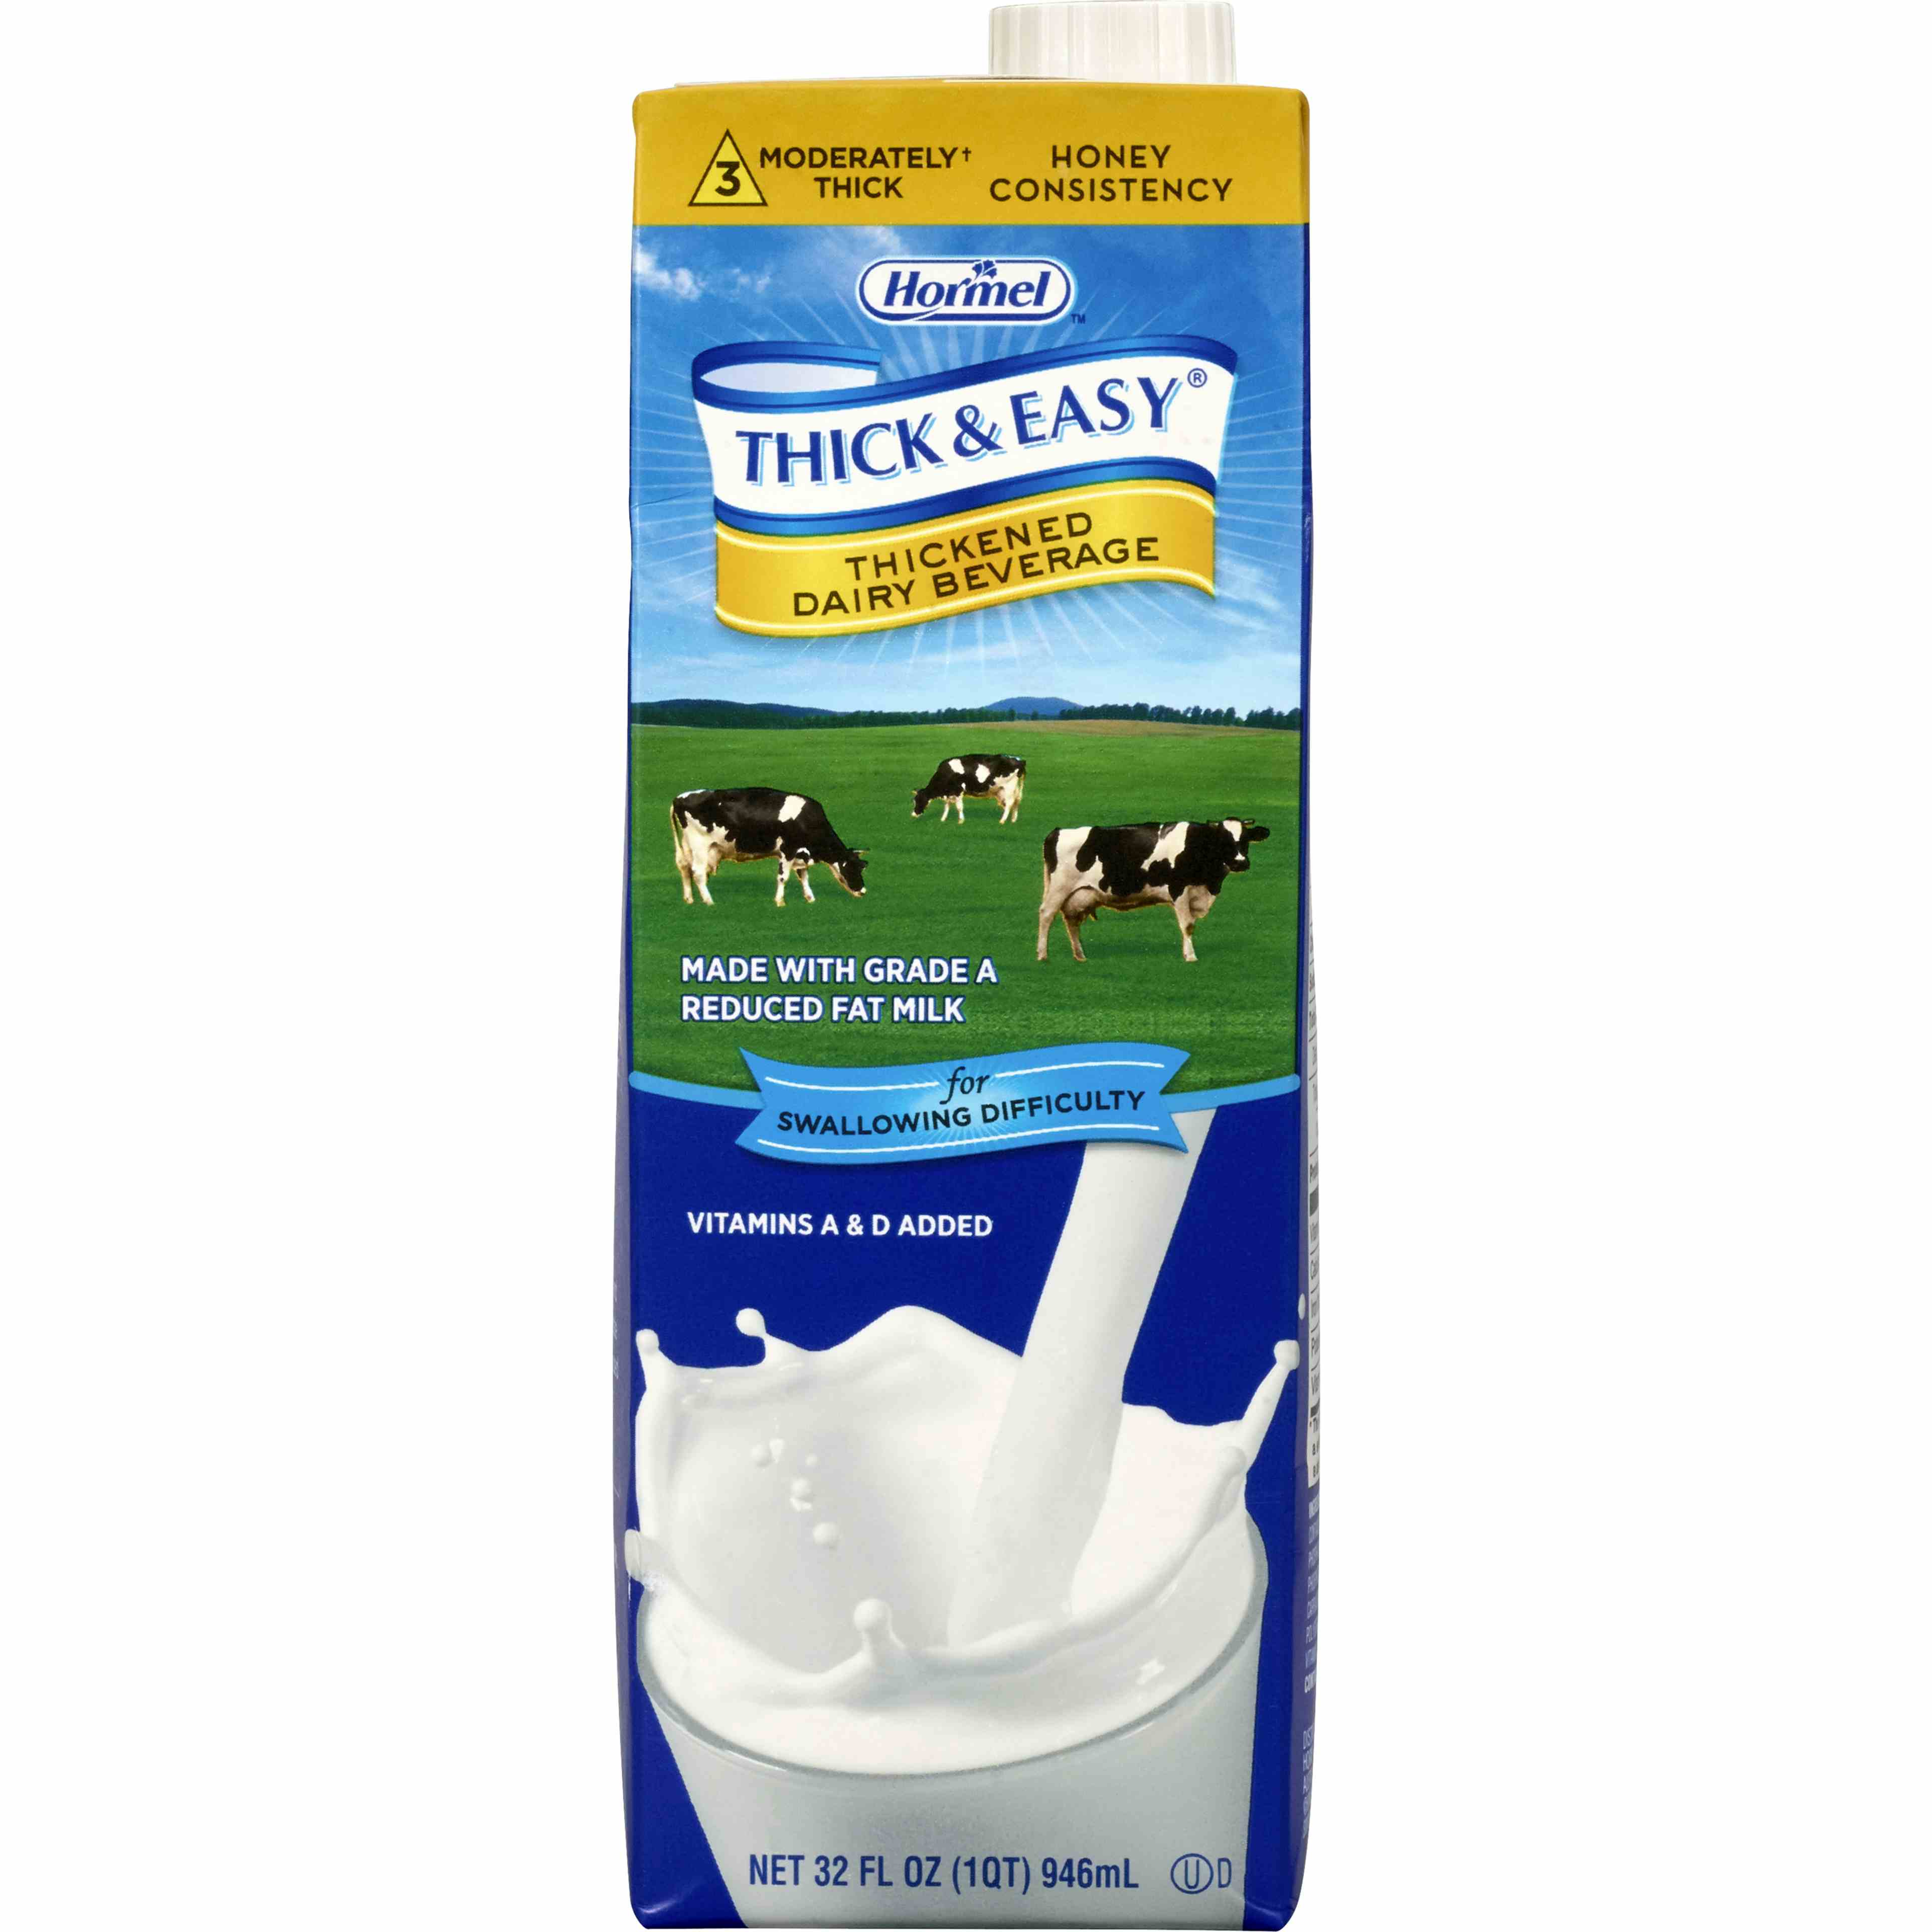 Thick & Easy Dairy Honey Consistency Milk Thickened Beverage, 32 oz. Carton, 73626, Case of 8